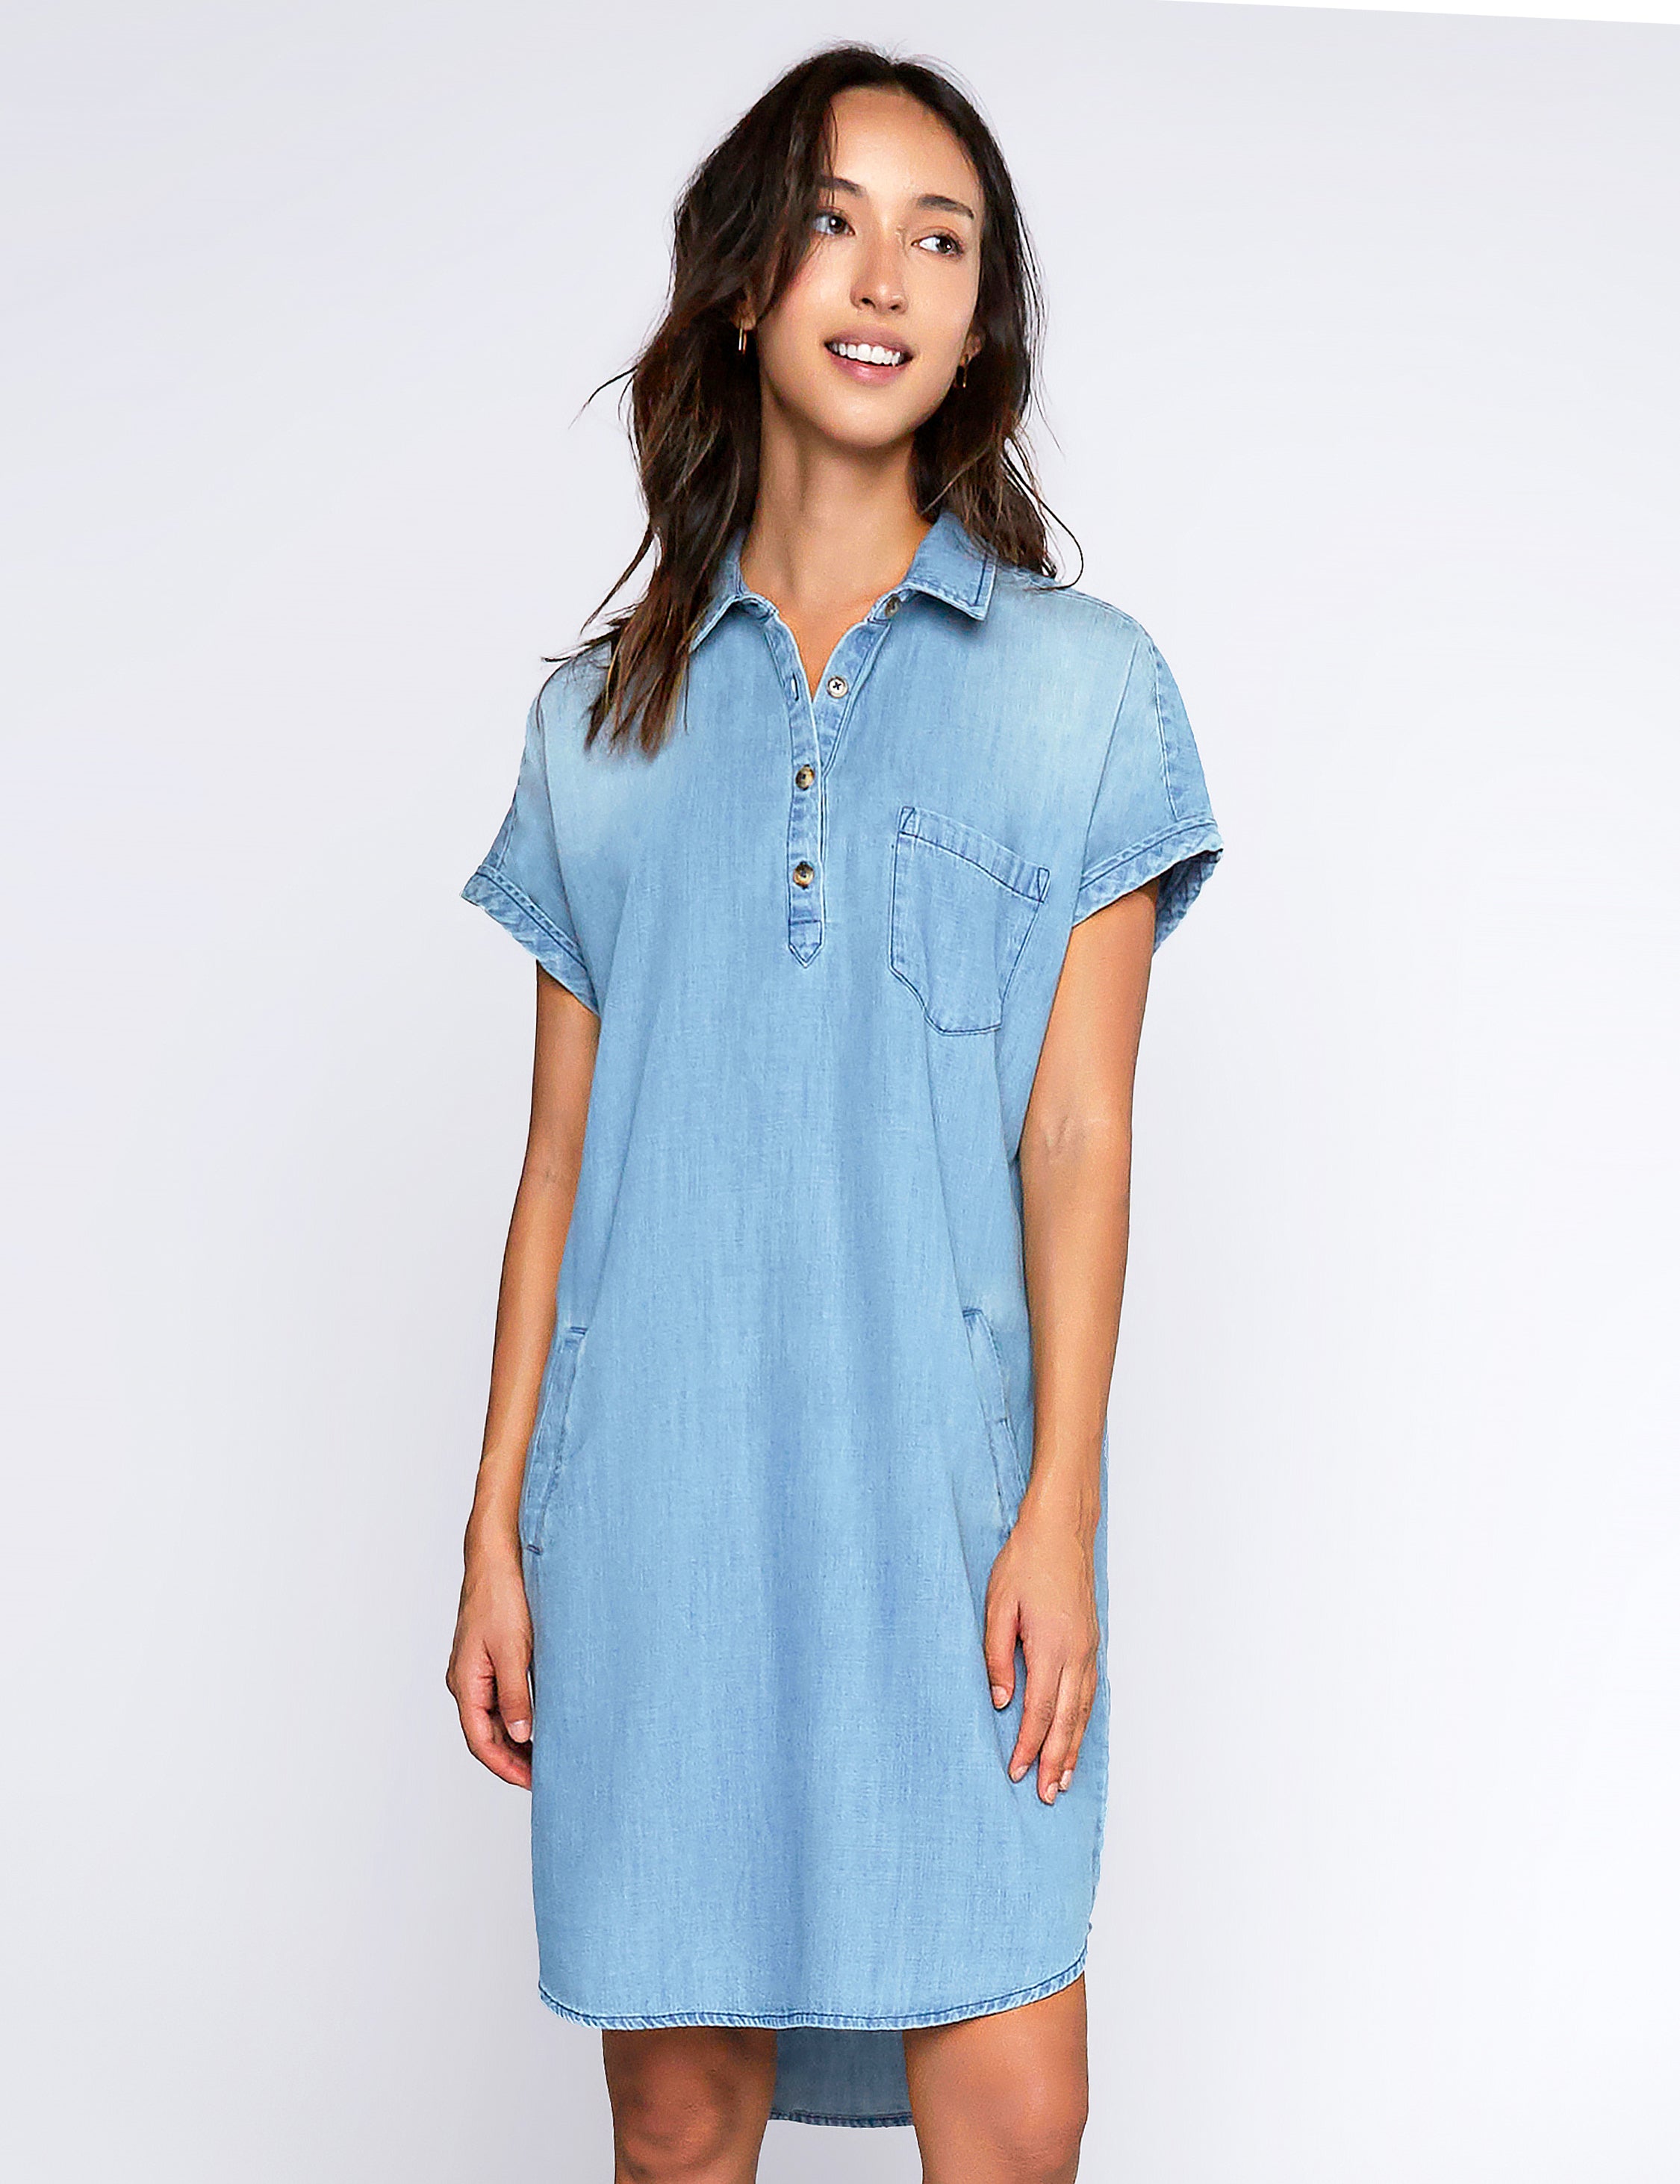 Denim Shirt Dress - Shop Women's Clothing Online - Pixie Boerne